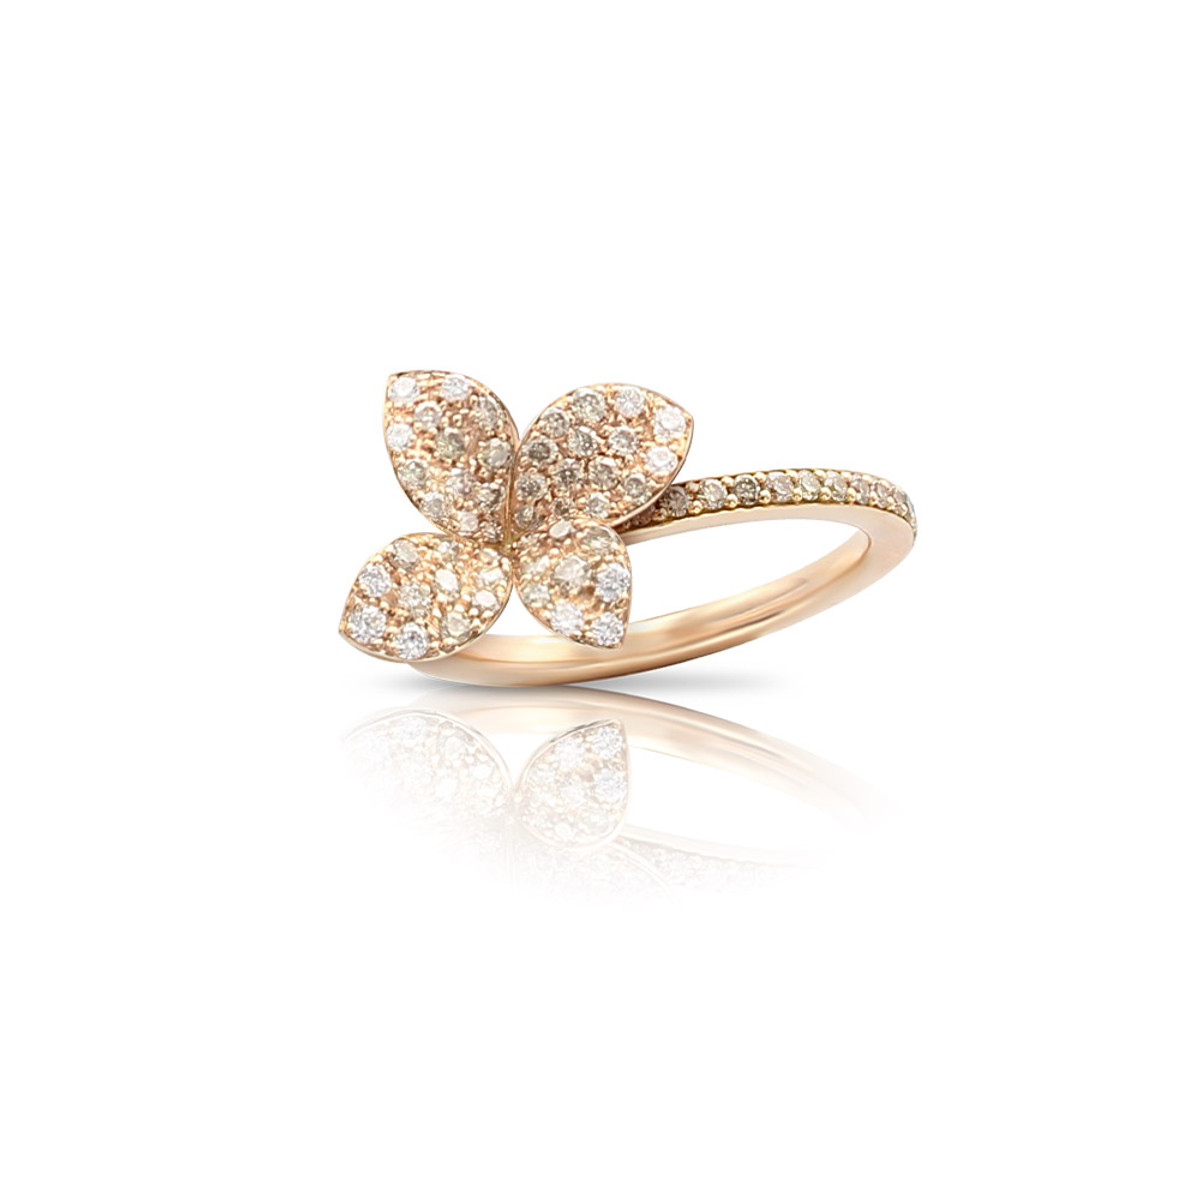 Pasquale Bruni 18K Rose Gold Diamond Petit Garden Ring-42369 Product Image